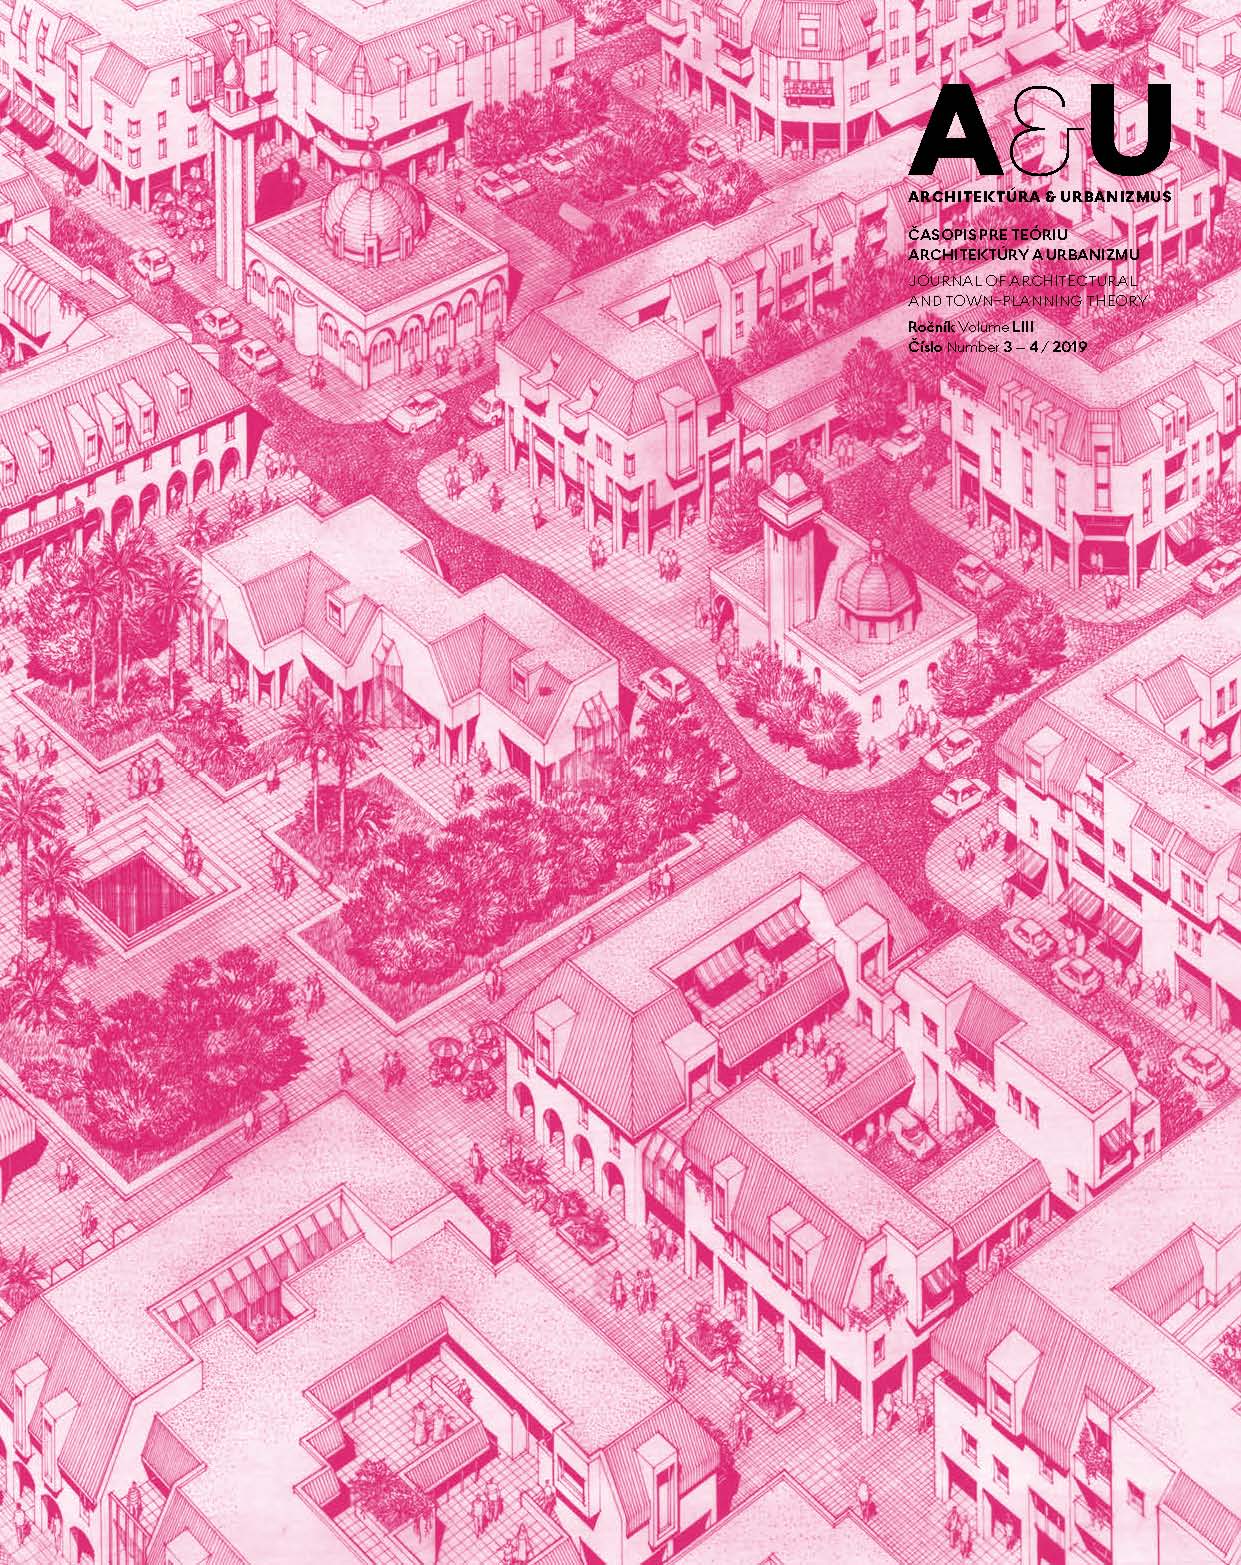 Interpreting 20th Century European Urbanism: Differing Layers of Understanding